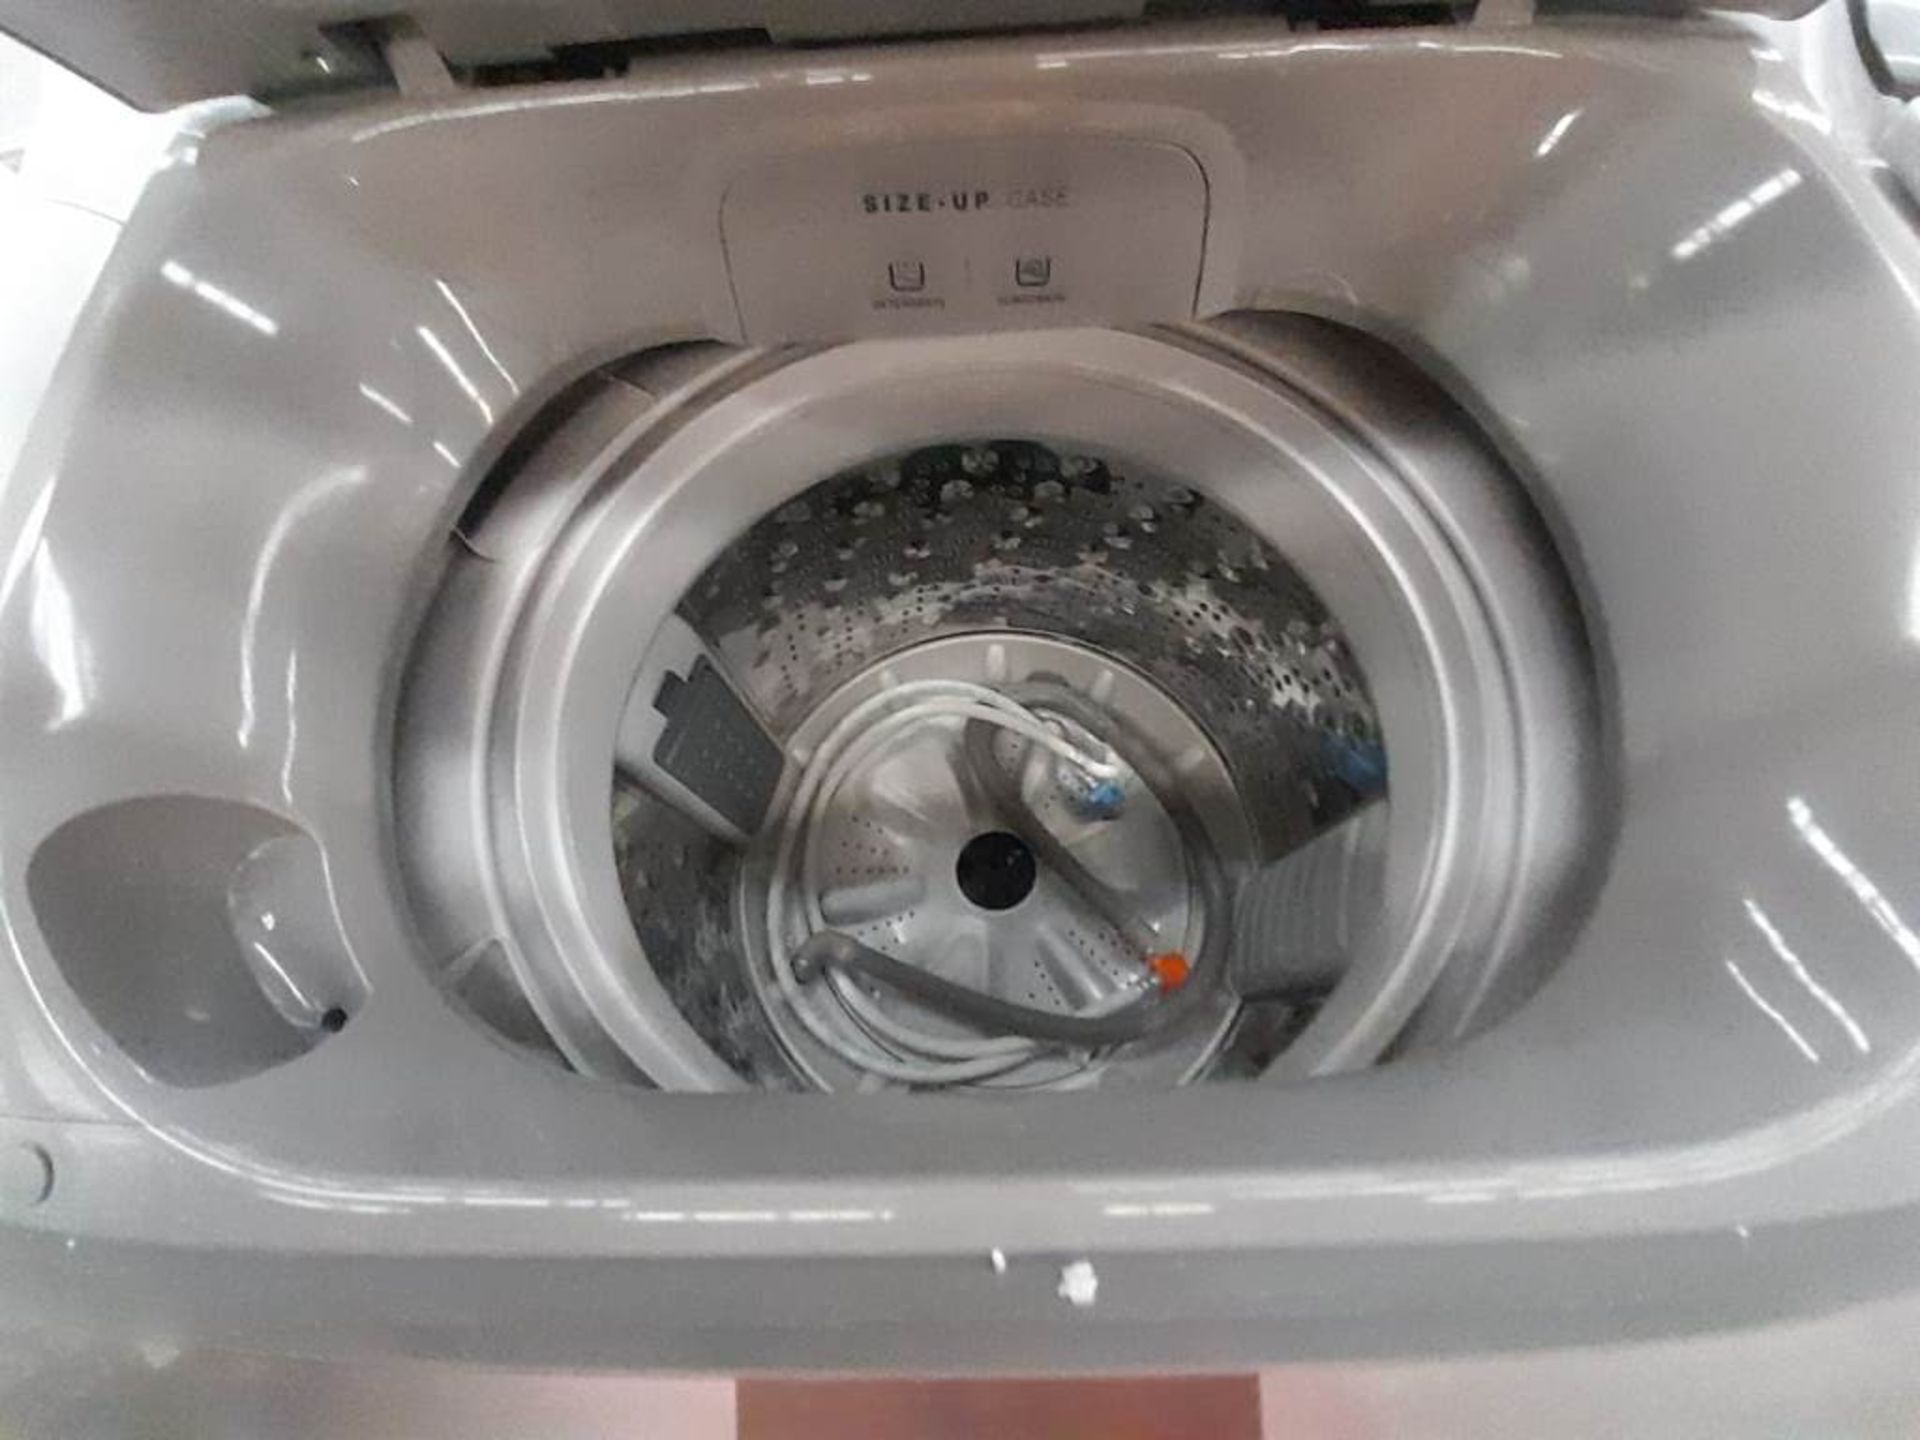 Lote de 2 Lavadoras contiene: 1 lavadora de 18 KG, Marca WINIA, Modelo DWFDG361AGG1, Serie 242155, - Image 7 of 11